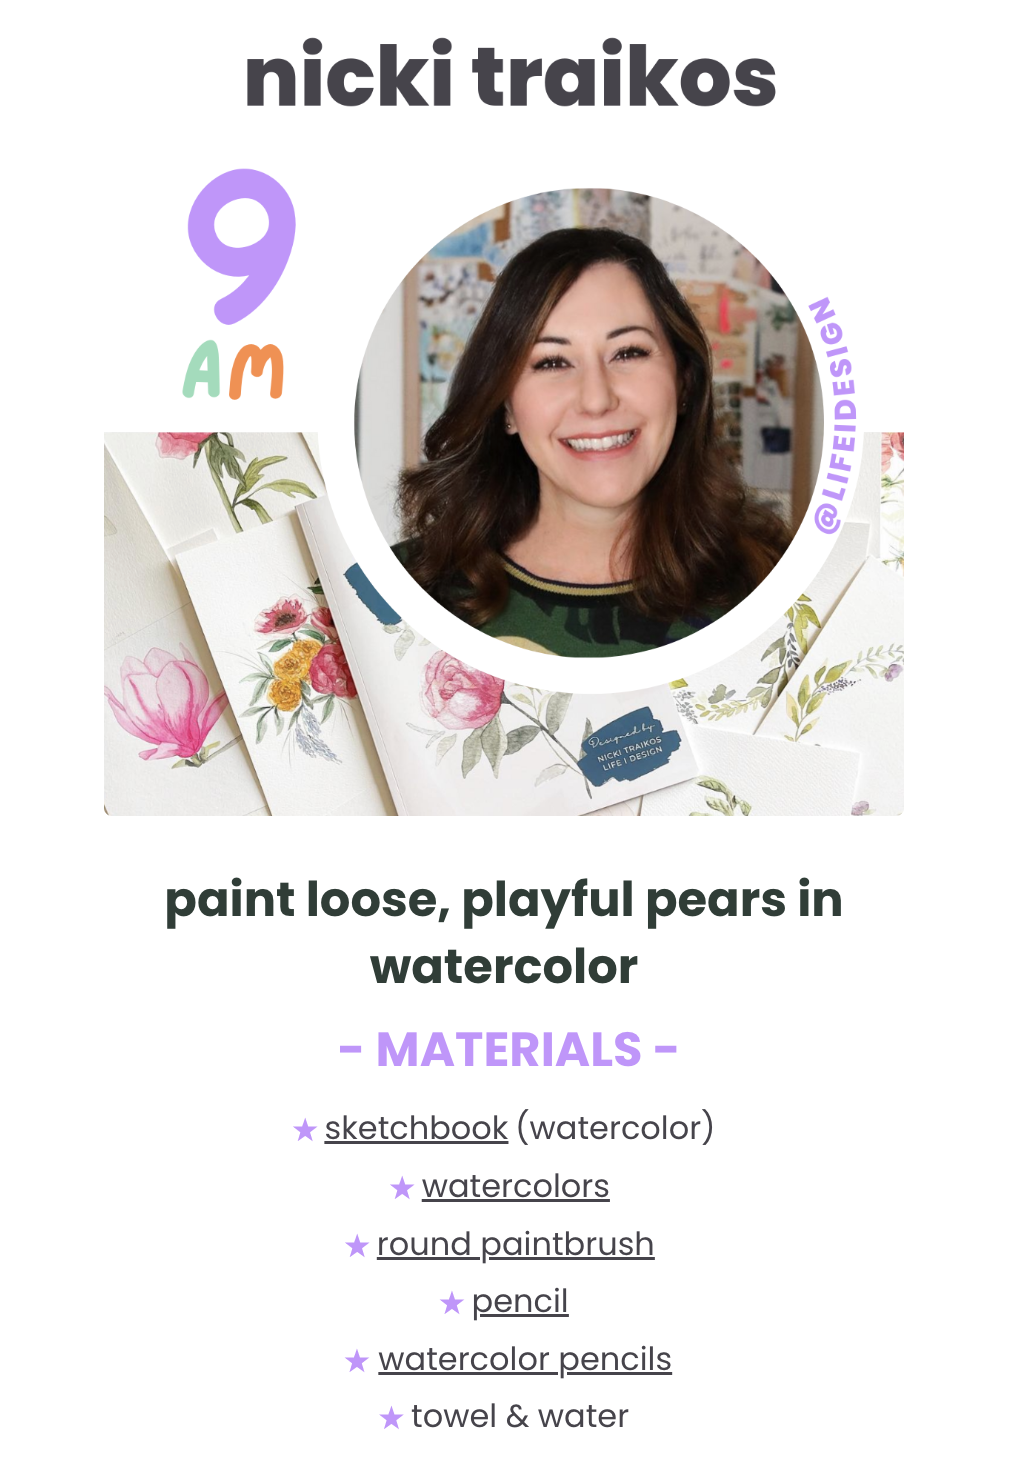 Watercolor Made Simple Book — Nicki Traikos, life i design